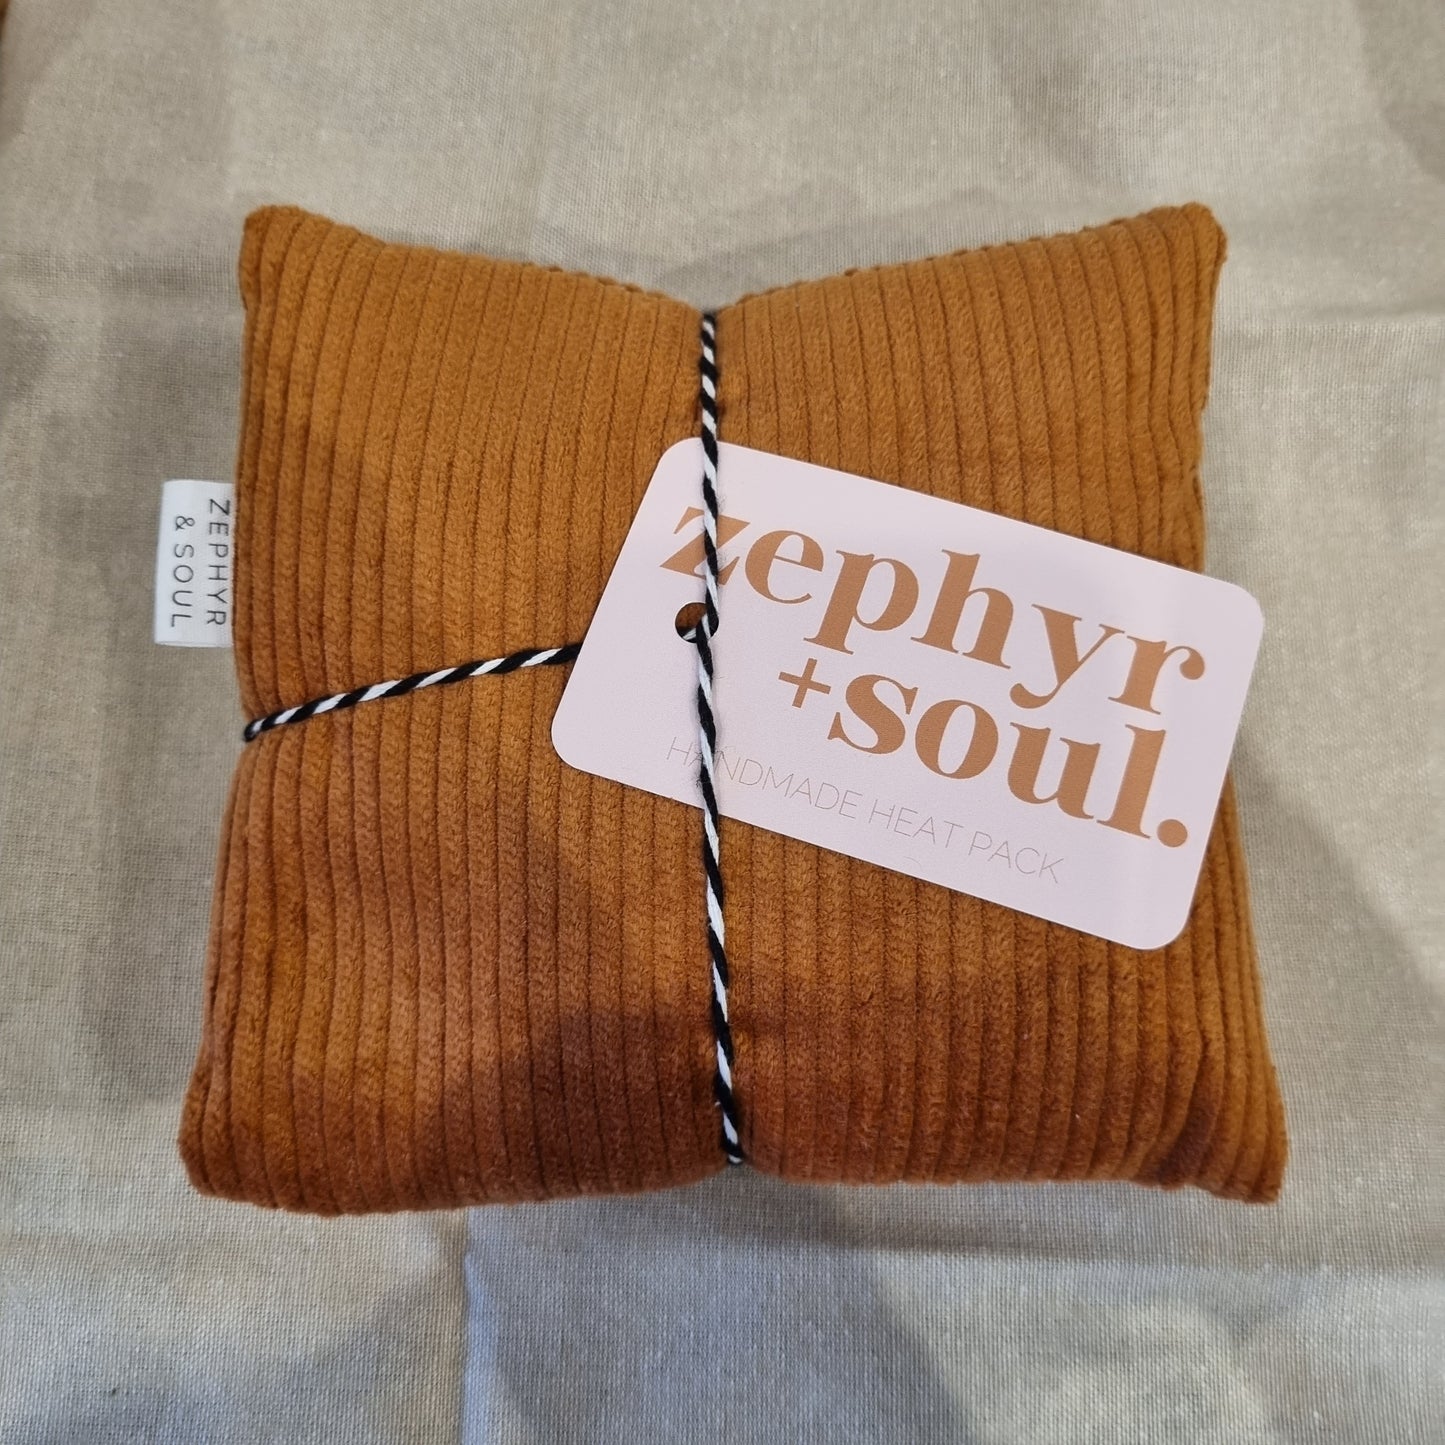 Zephyr and Soul Linen Heat Pack